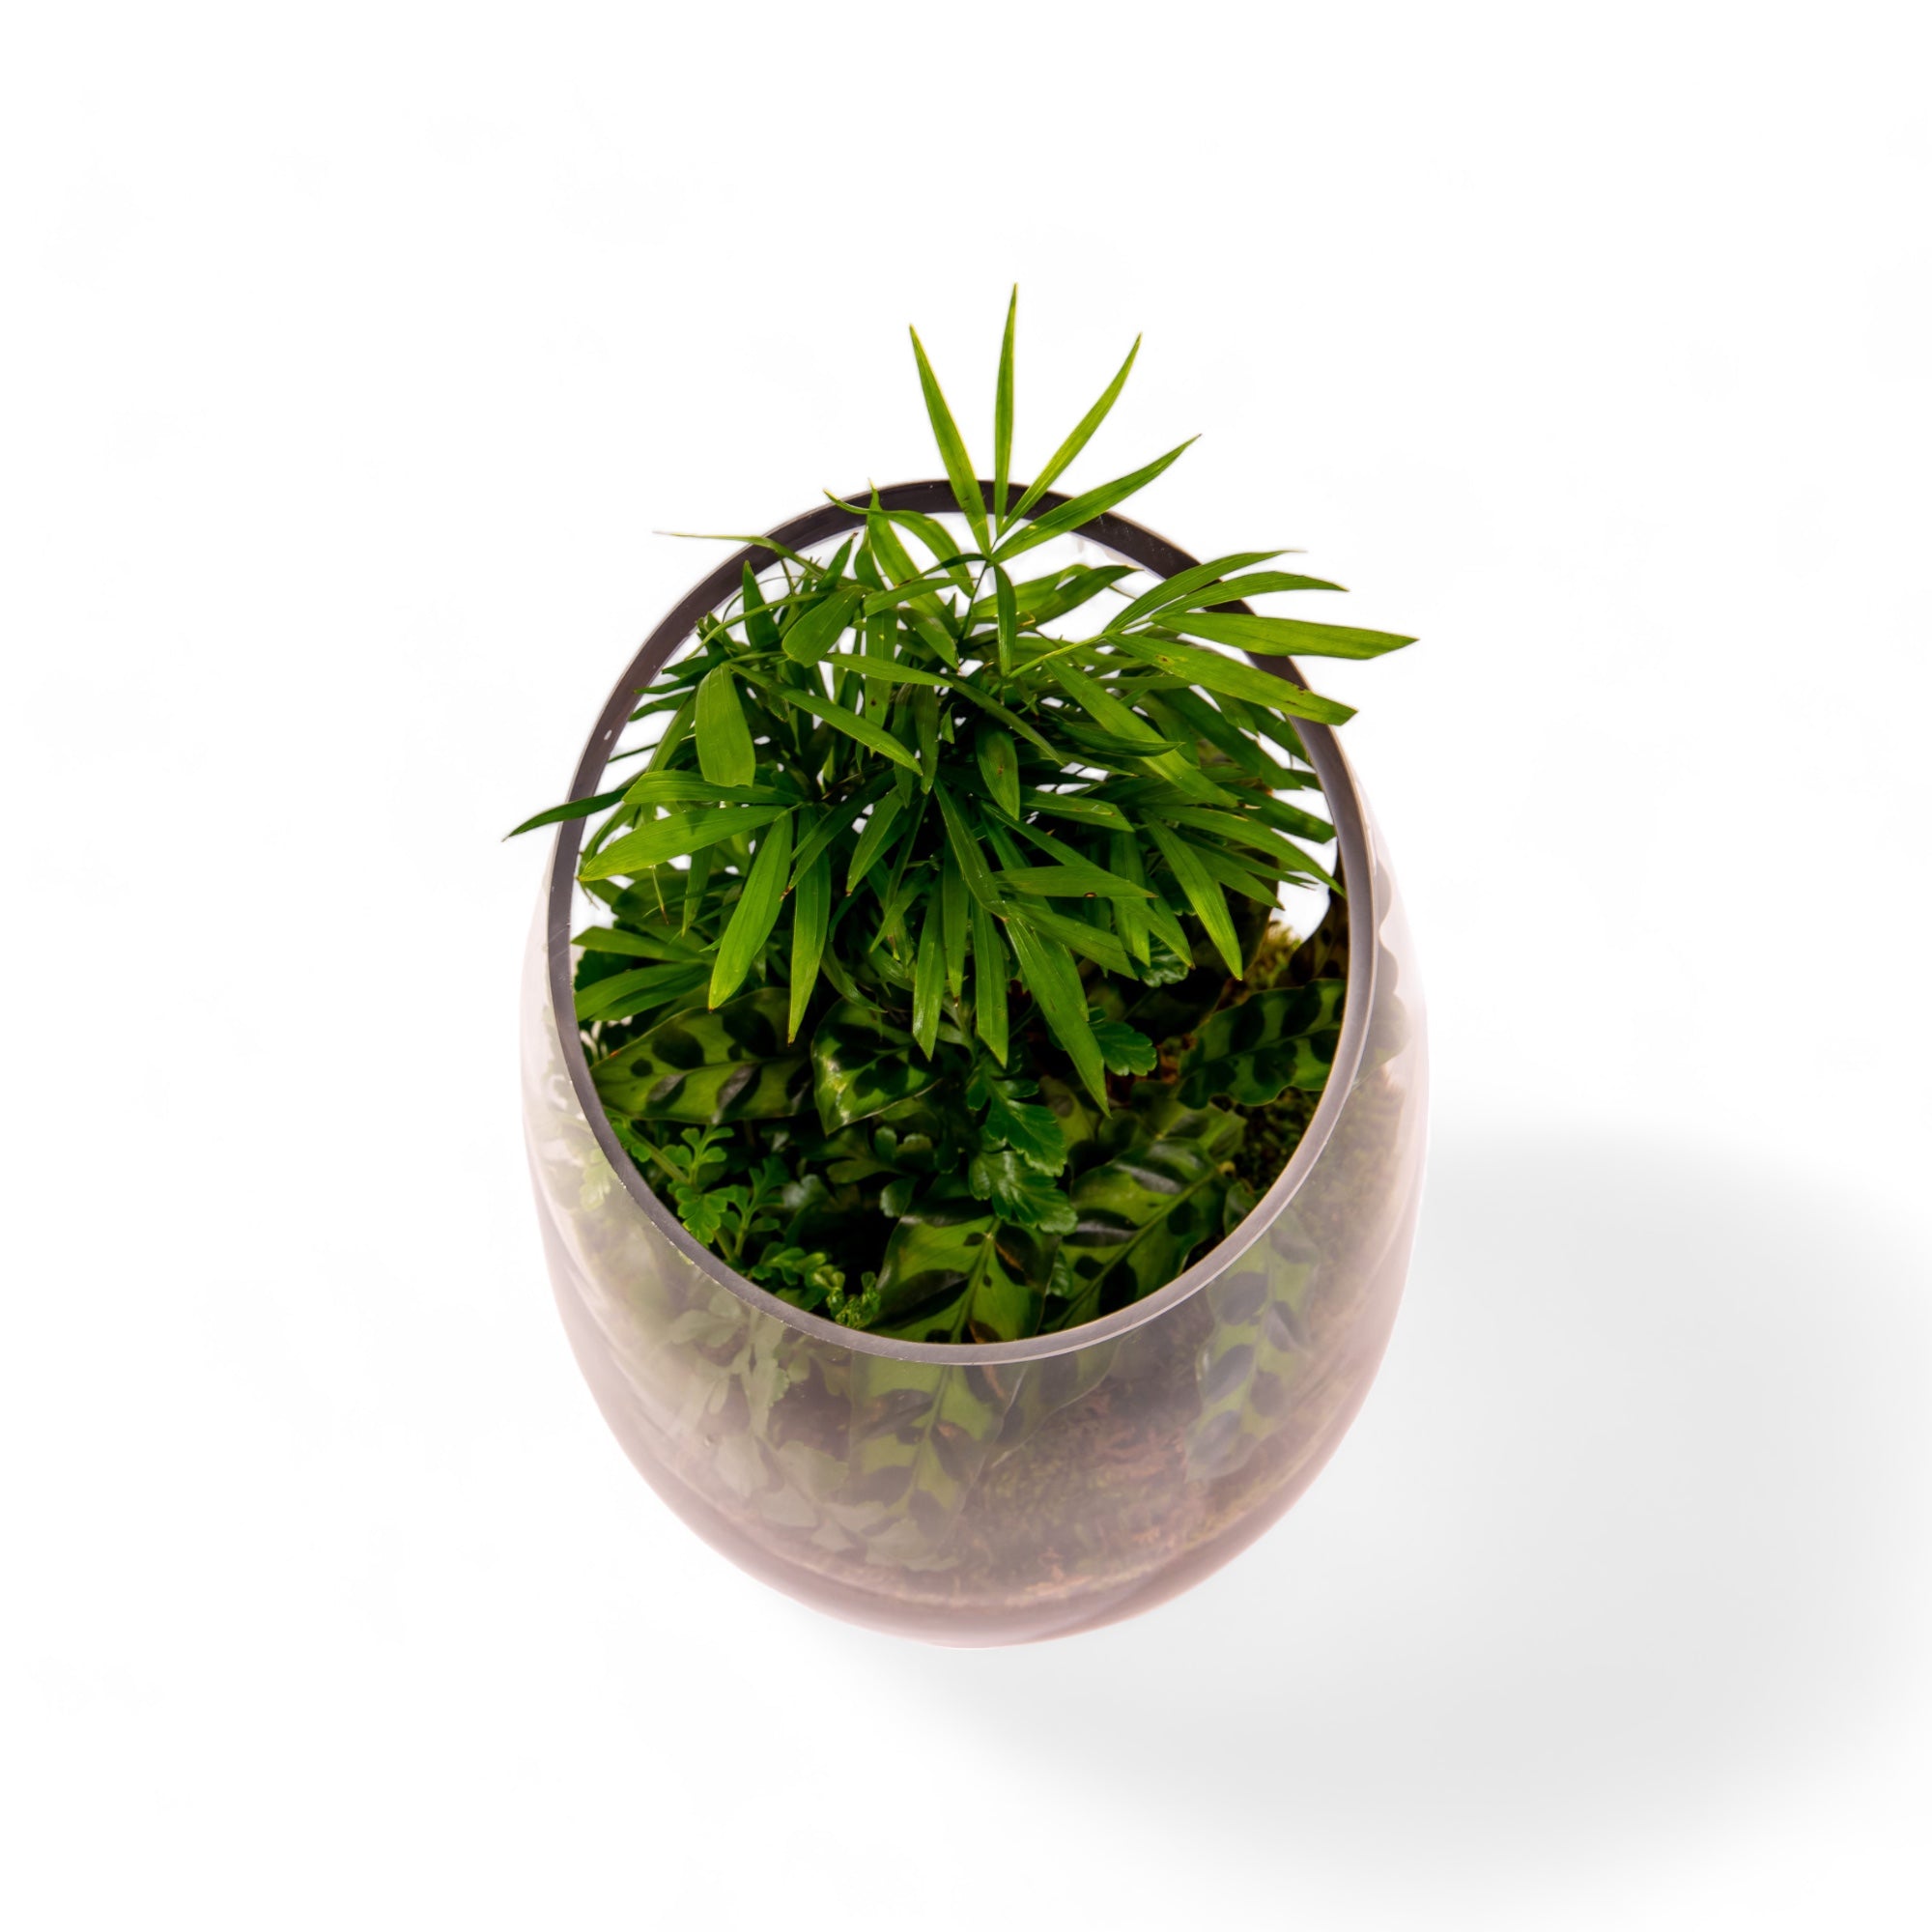 Bullet Vase Terrarium - Green Fresh Florals + Plants